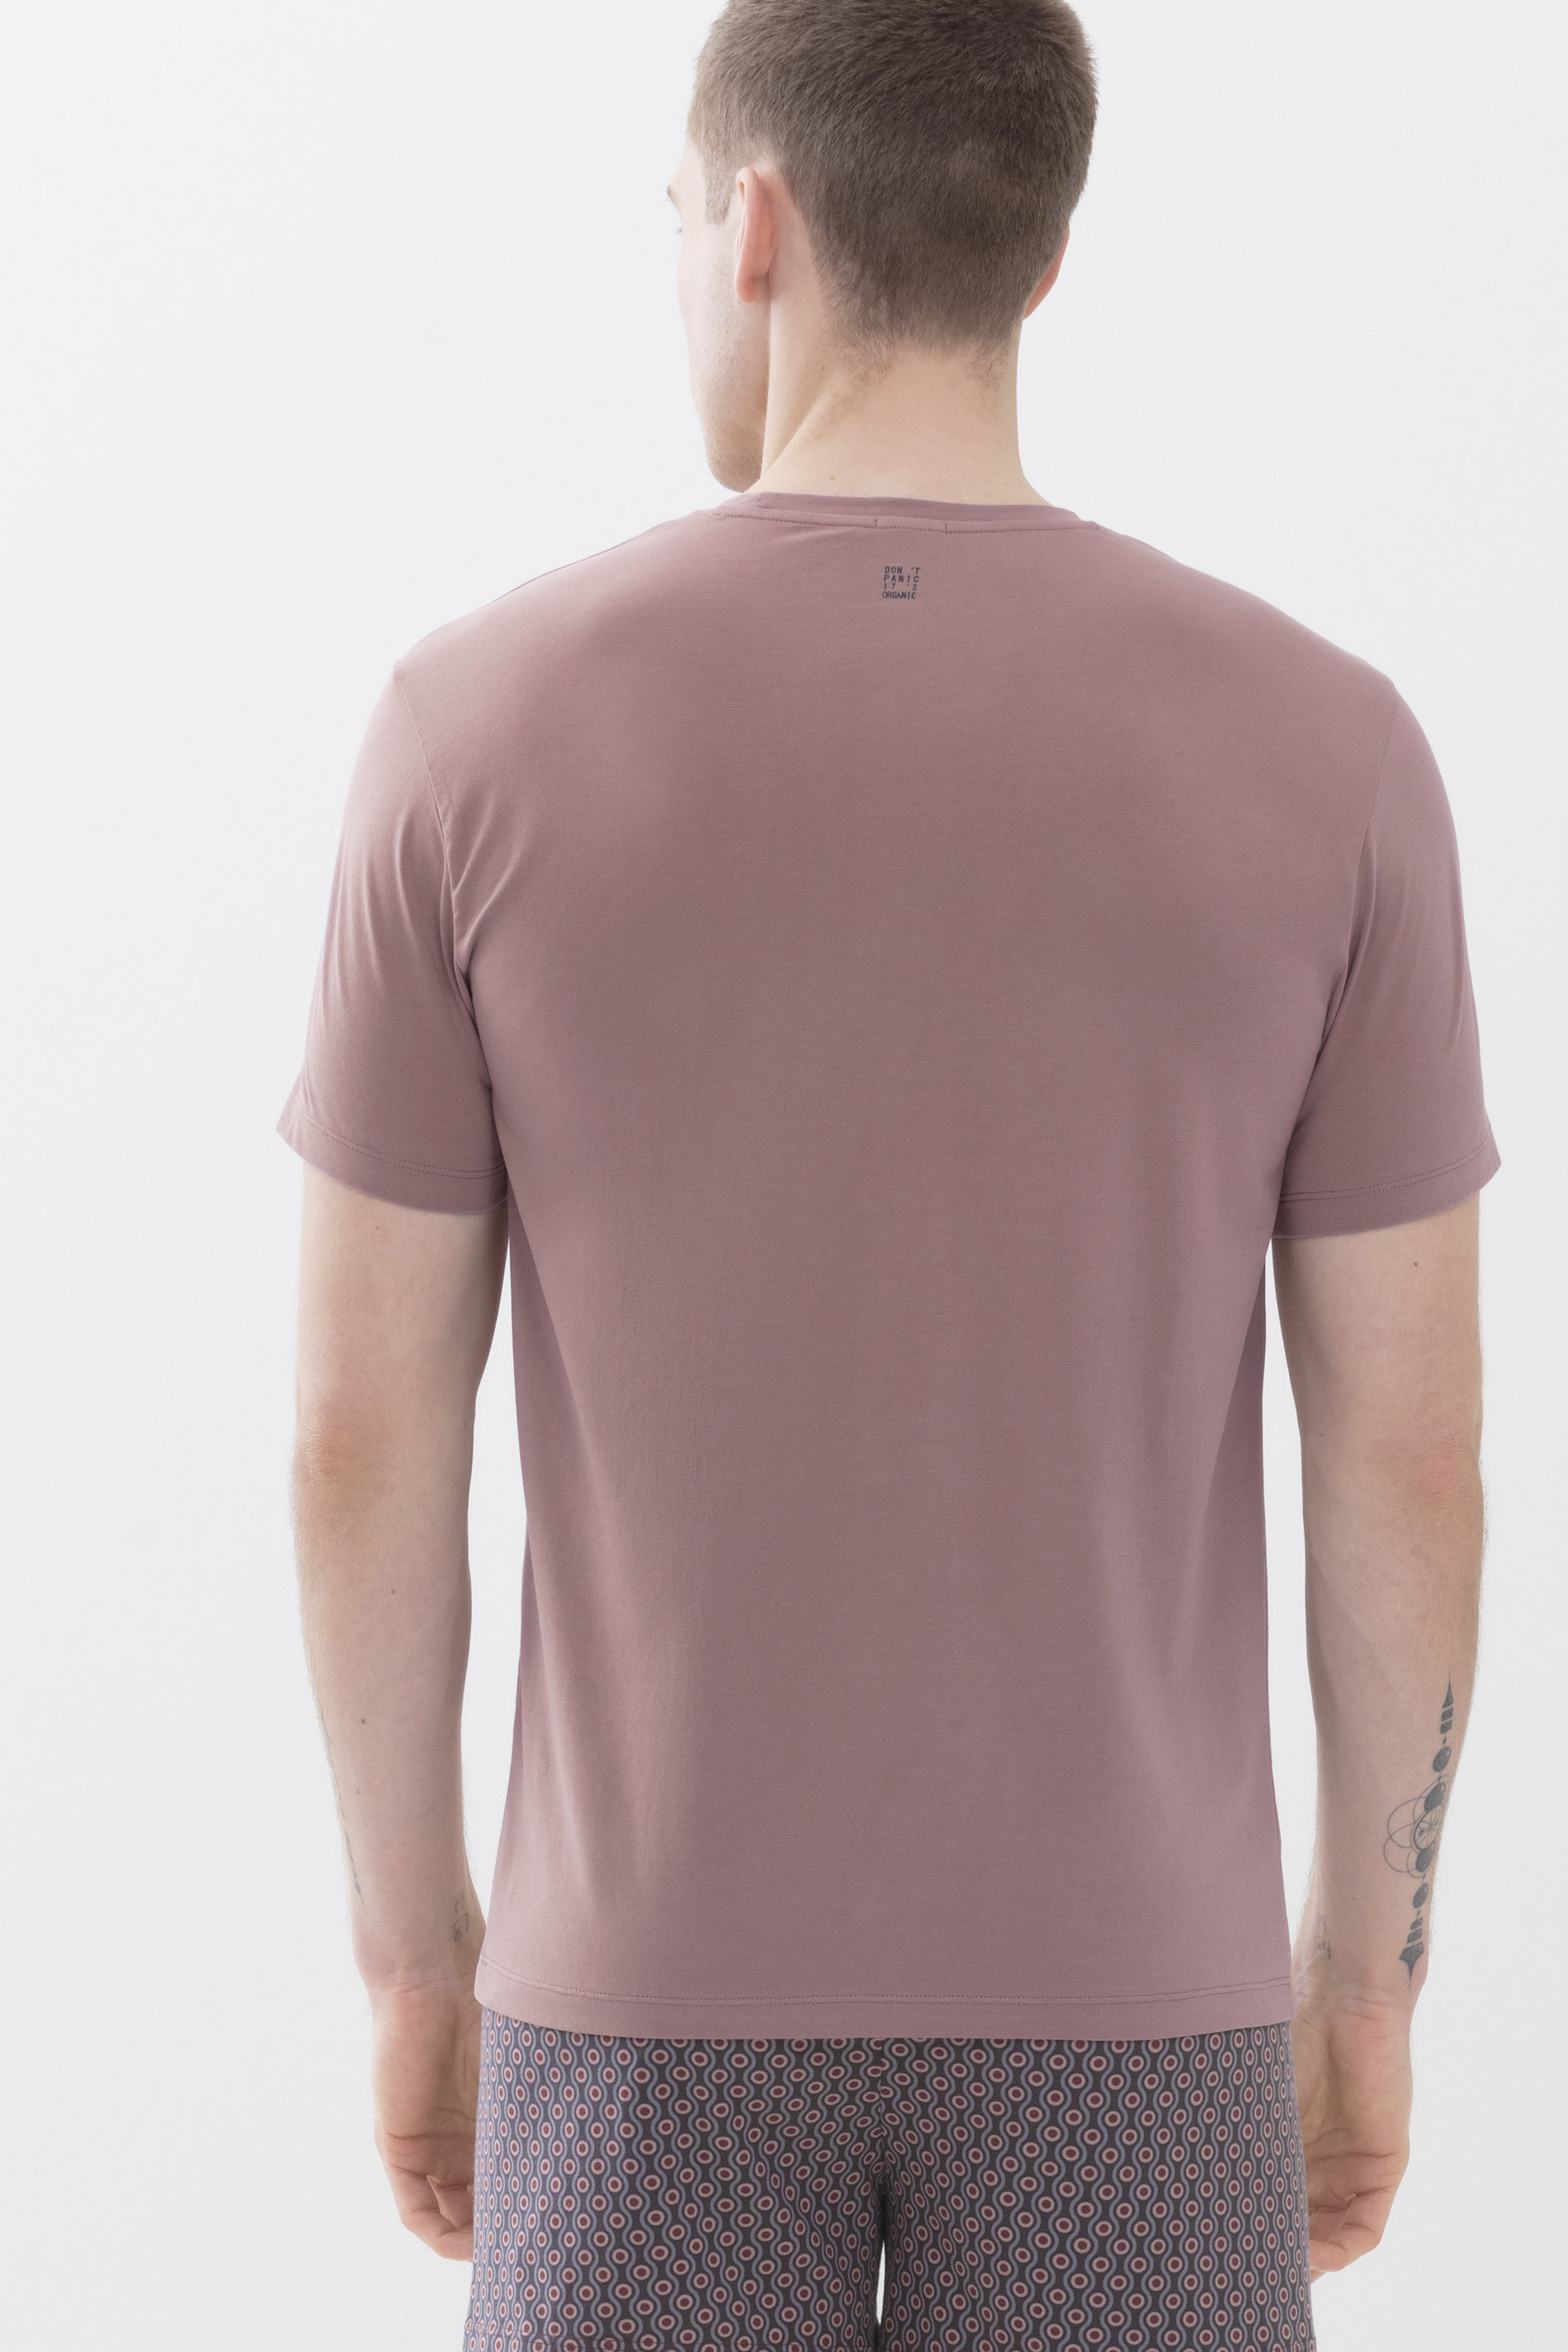 T-shirt Blush Powder Serie Relax Rear View | mey®